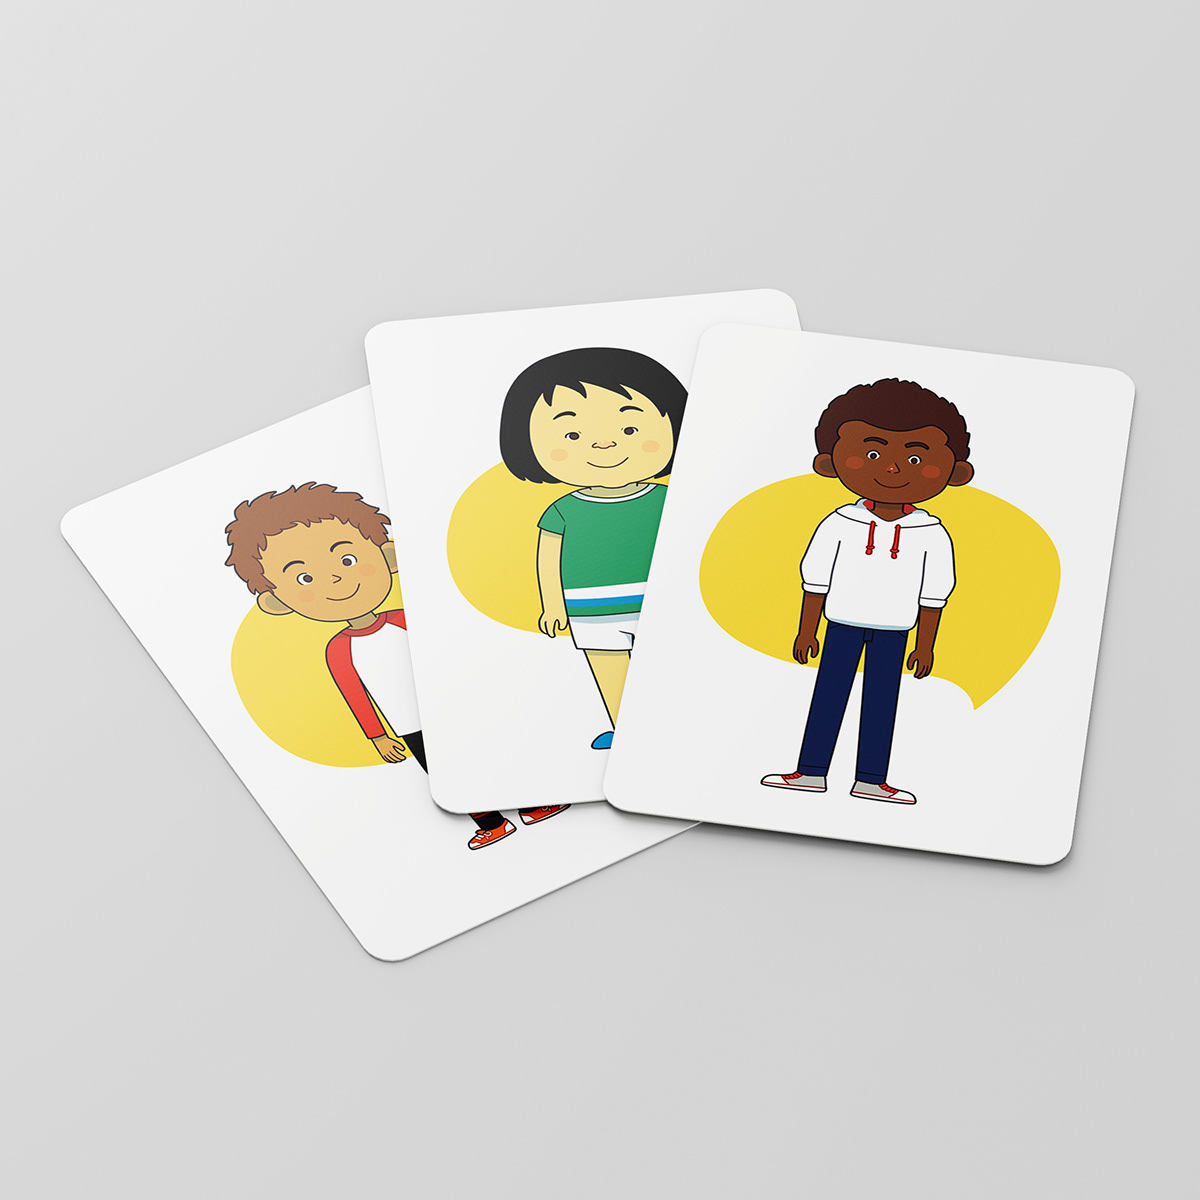 cardgame cards children deck game illustrated psychology therapy Digital Art  ILLUSTRATION 